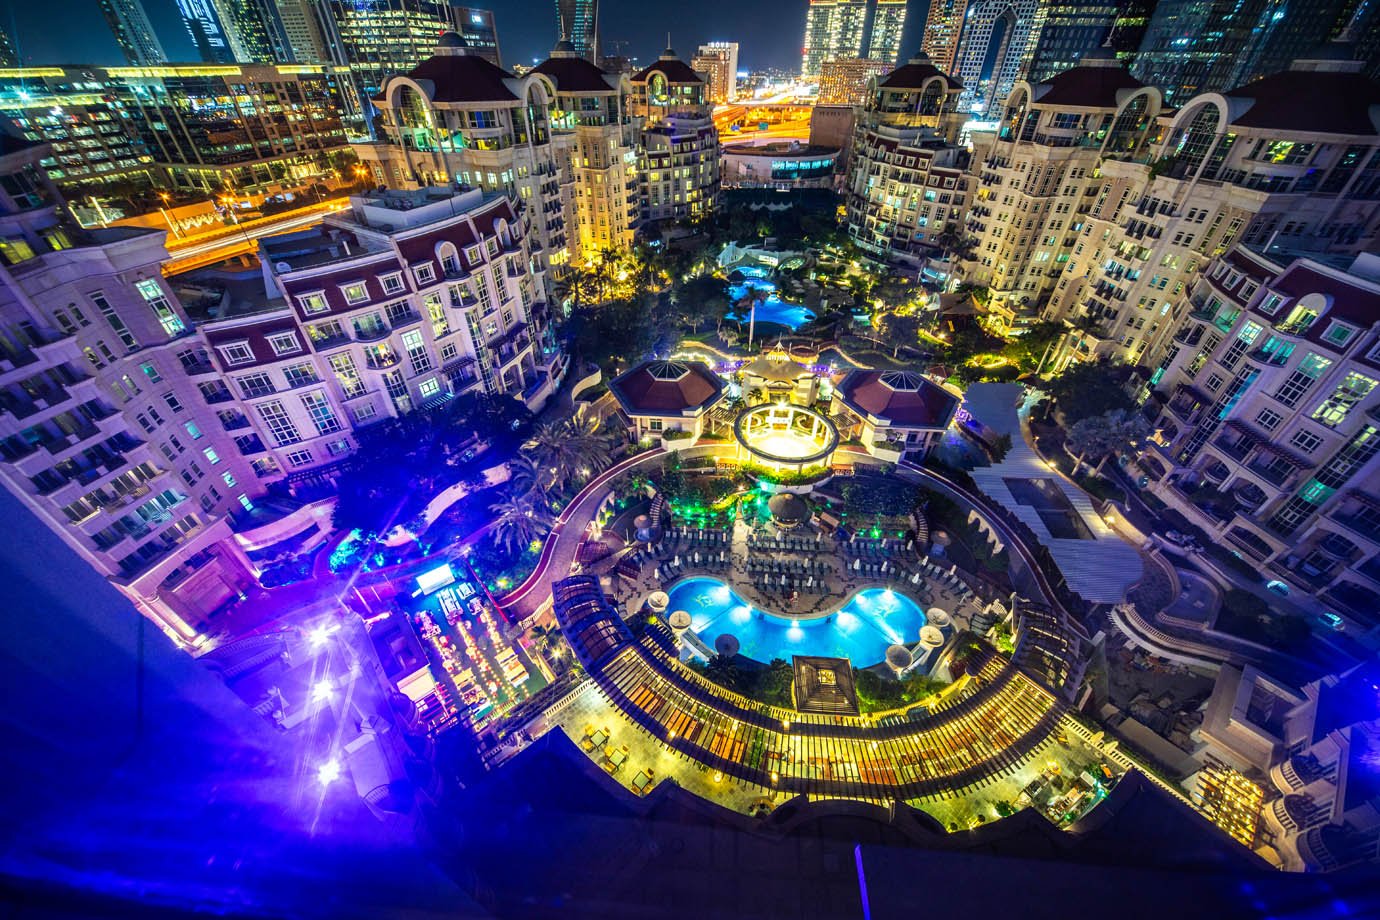 Vista de Dubai 

Foto: Leandro Fonseca
Data: dezembro 2023